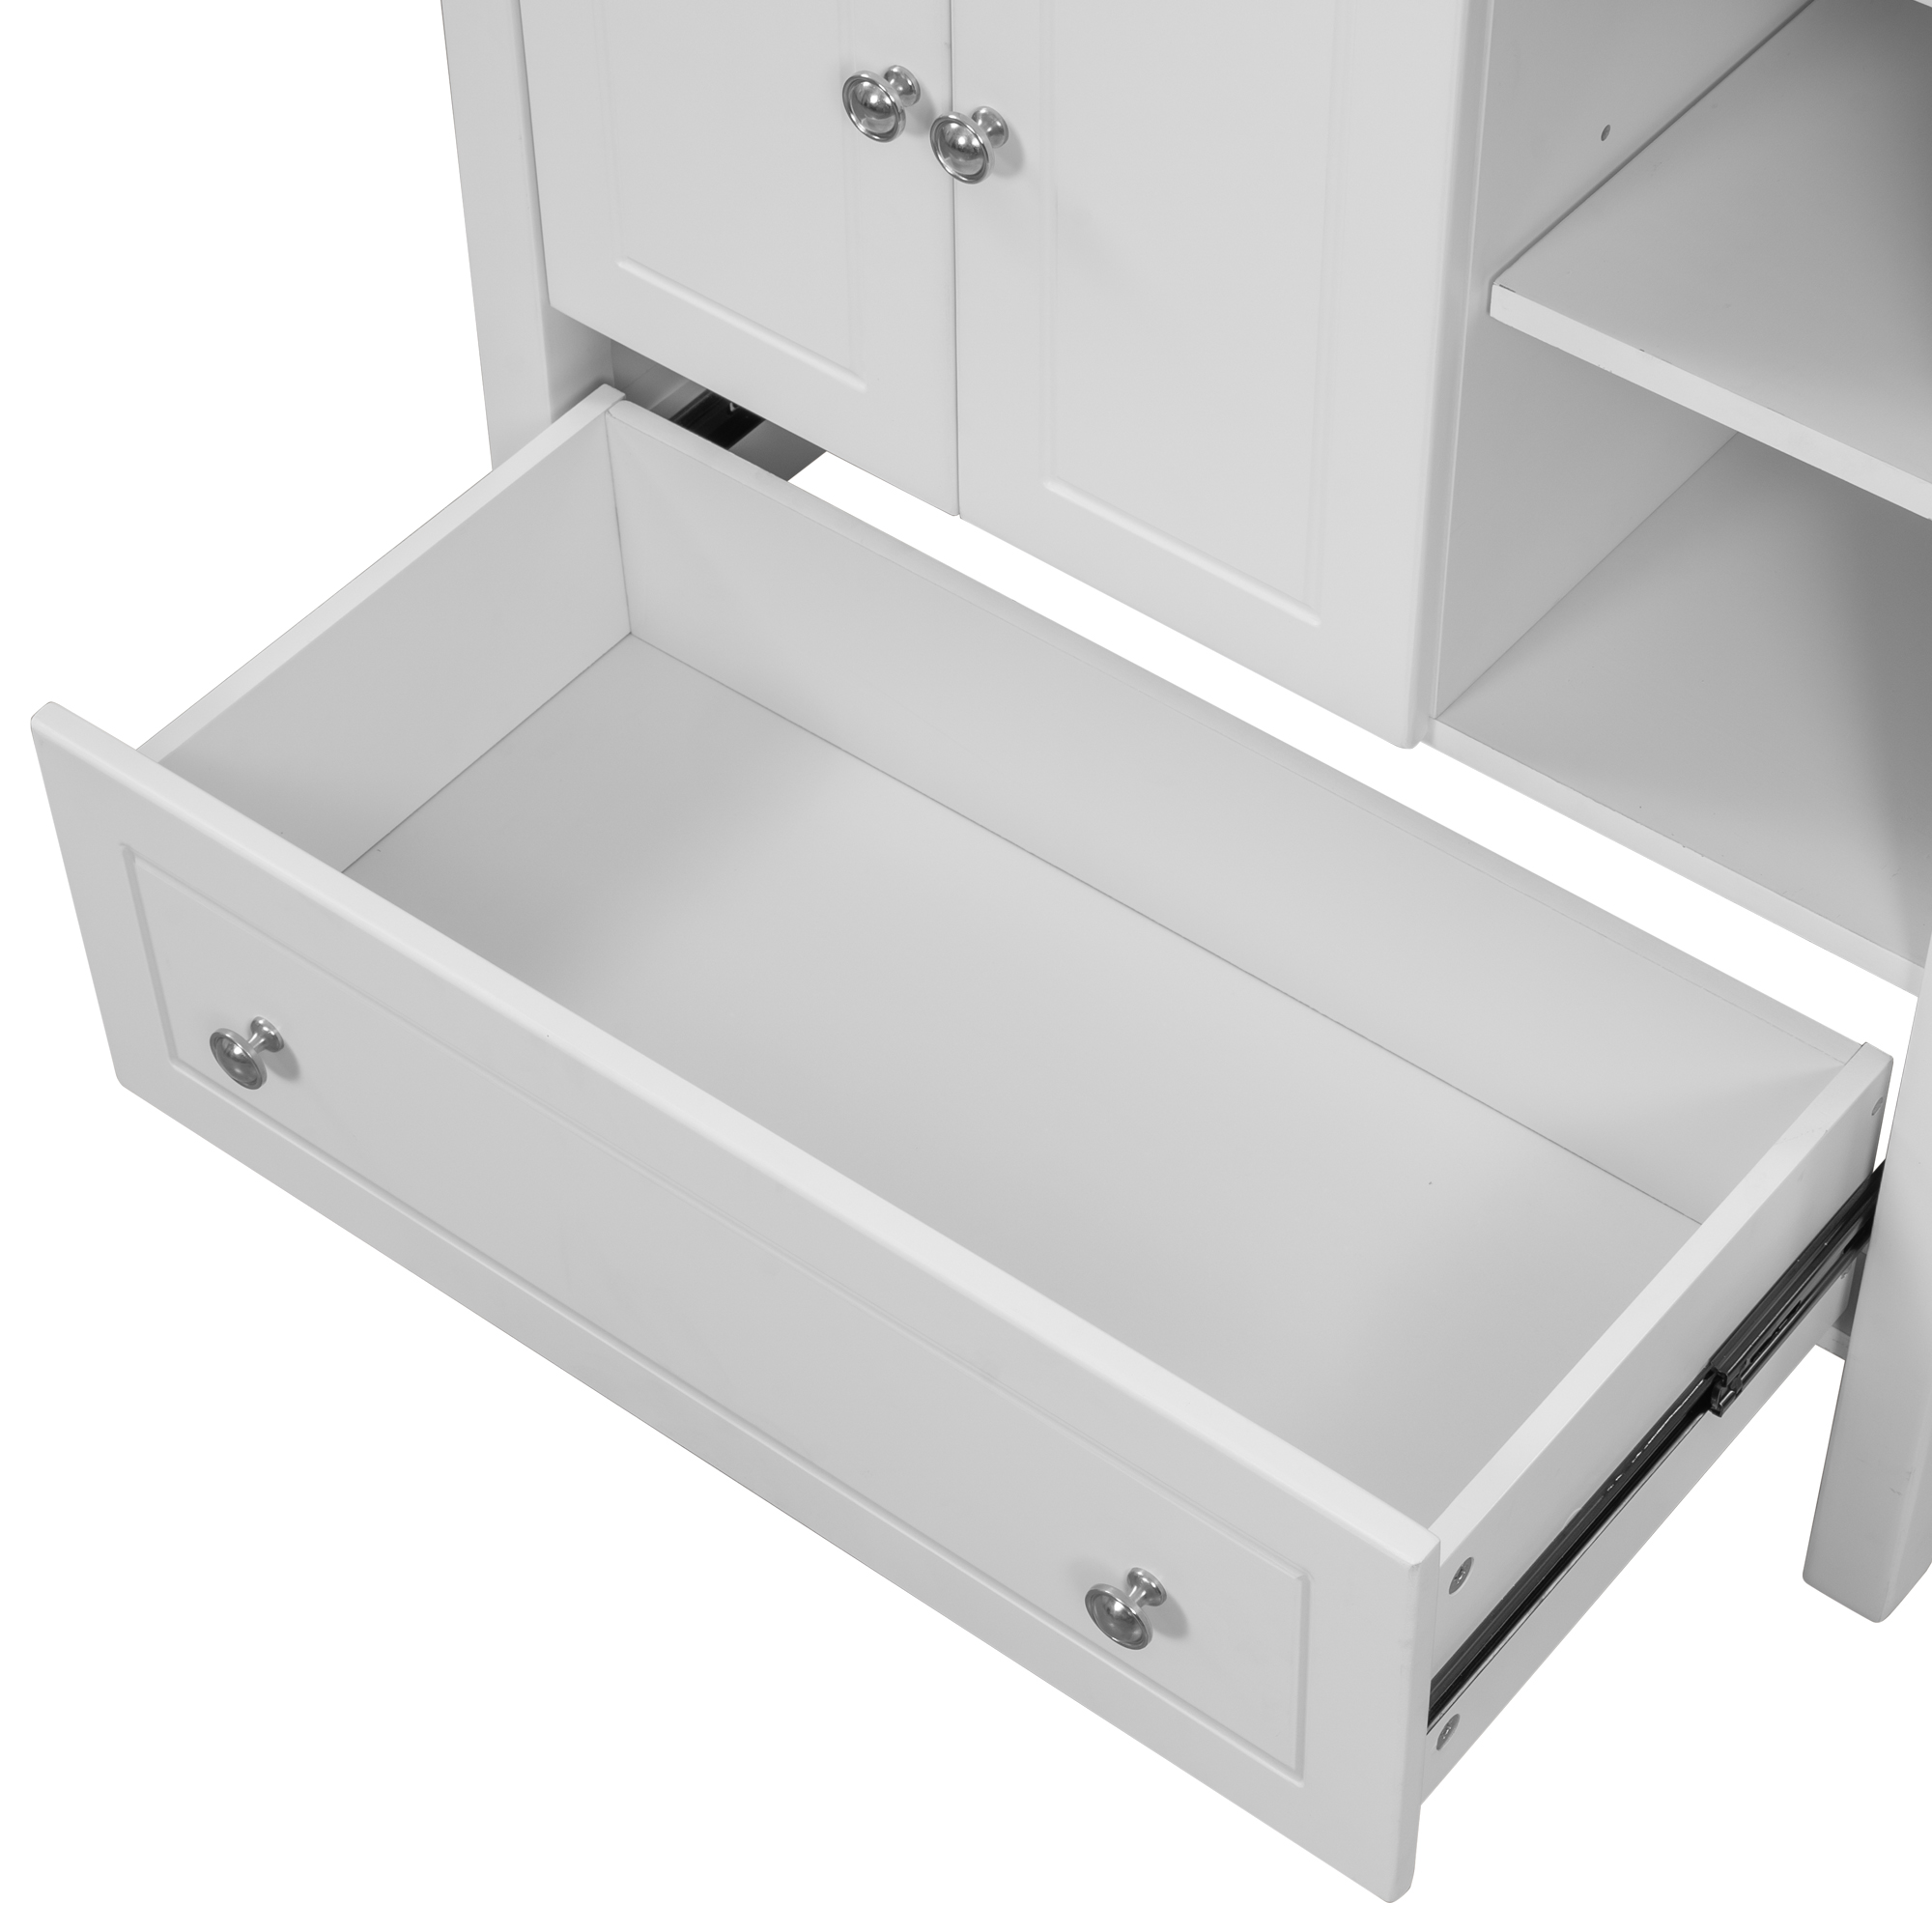 30" Bathroom Vanity Base Only, Solid Wood Frame, Bathroom Storage Cabinet With Doors And Drawers, White - WF283480AAK